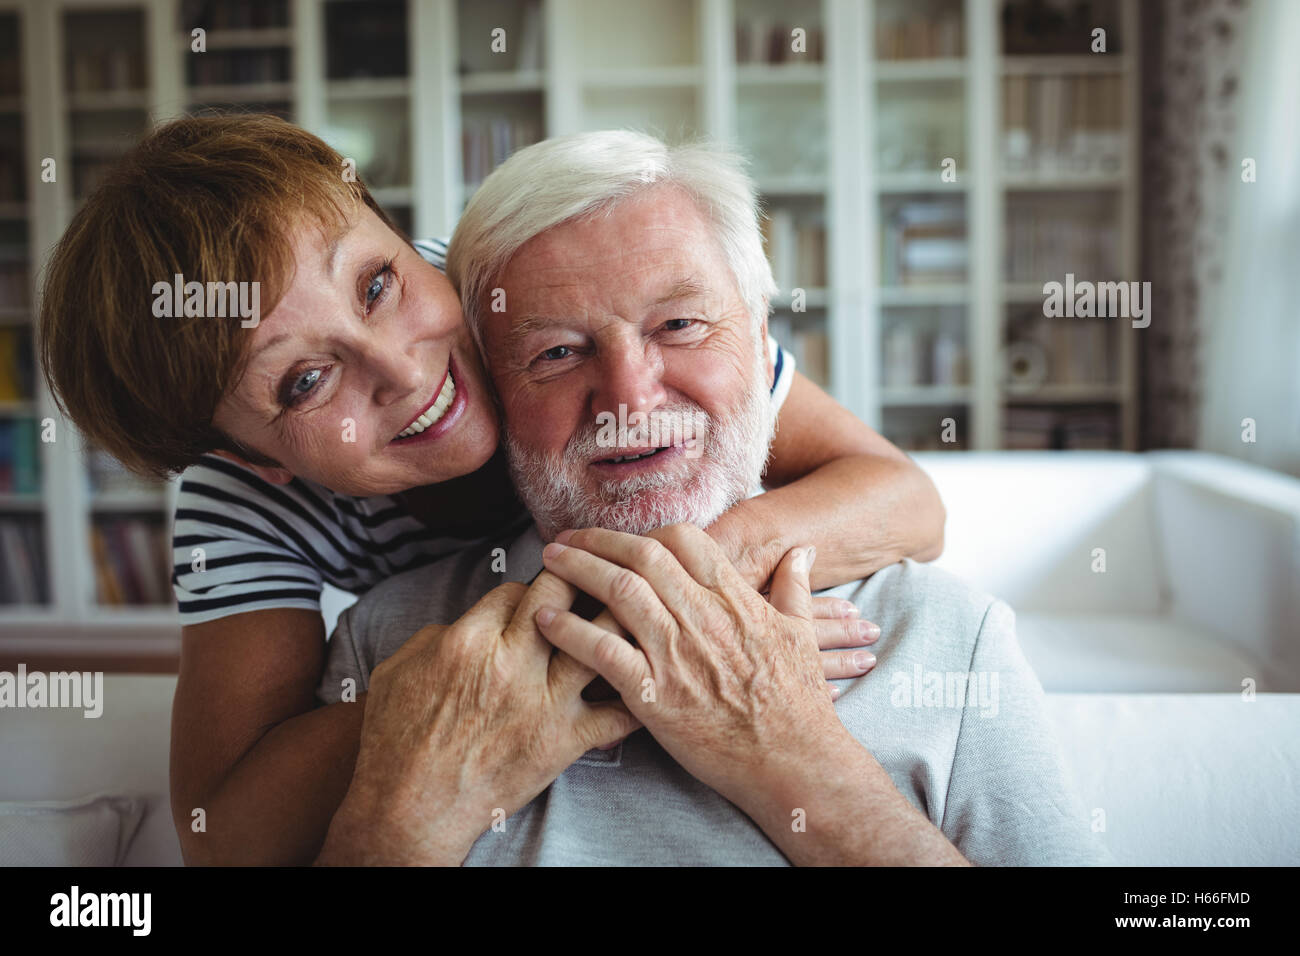 Senior woman embracing man at home Banque D'Images